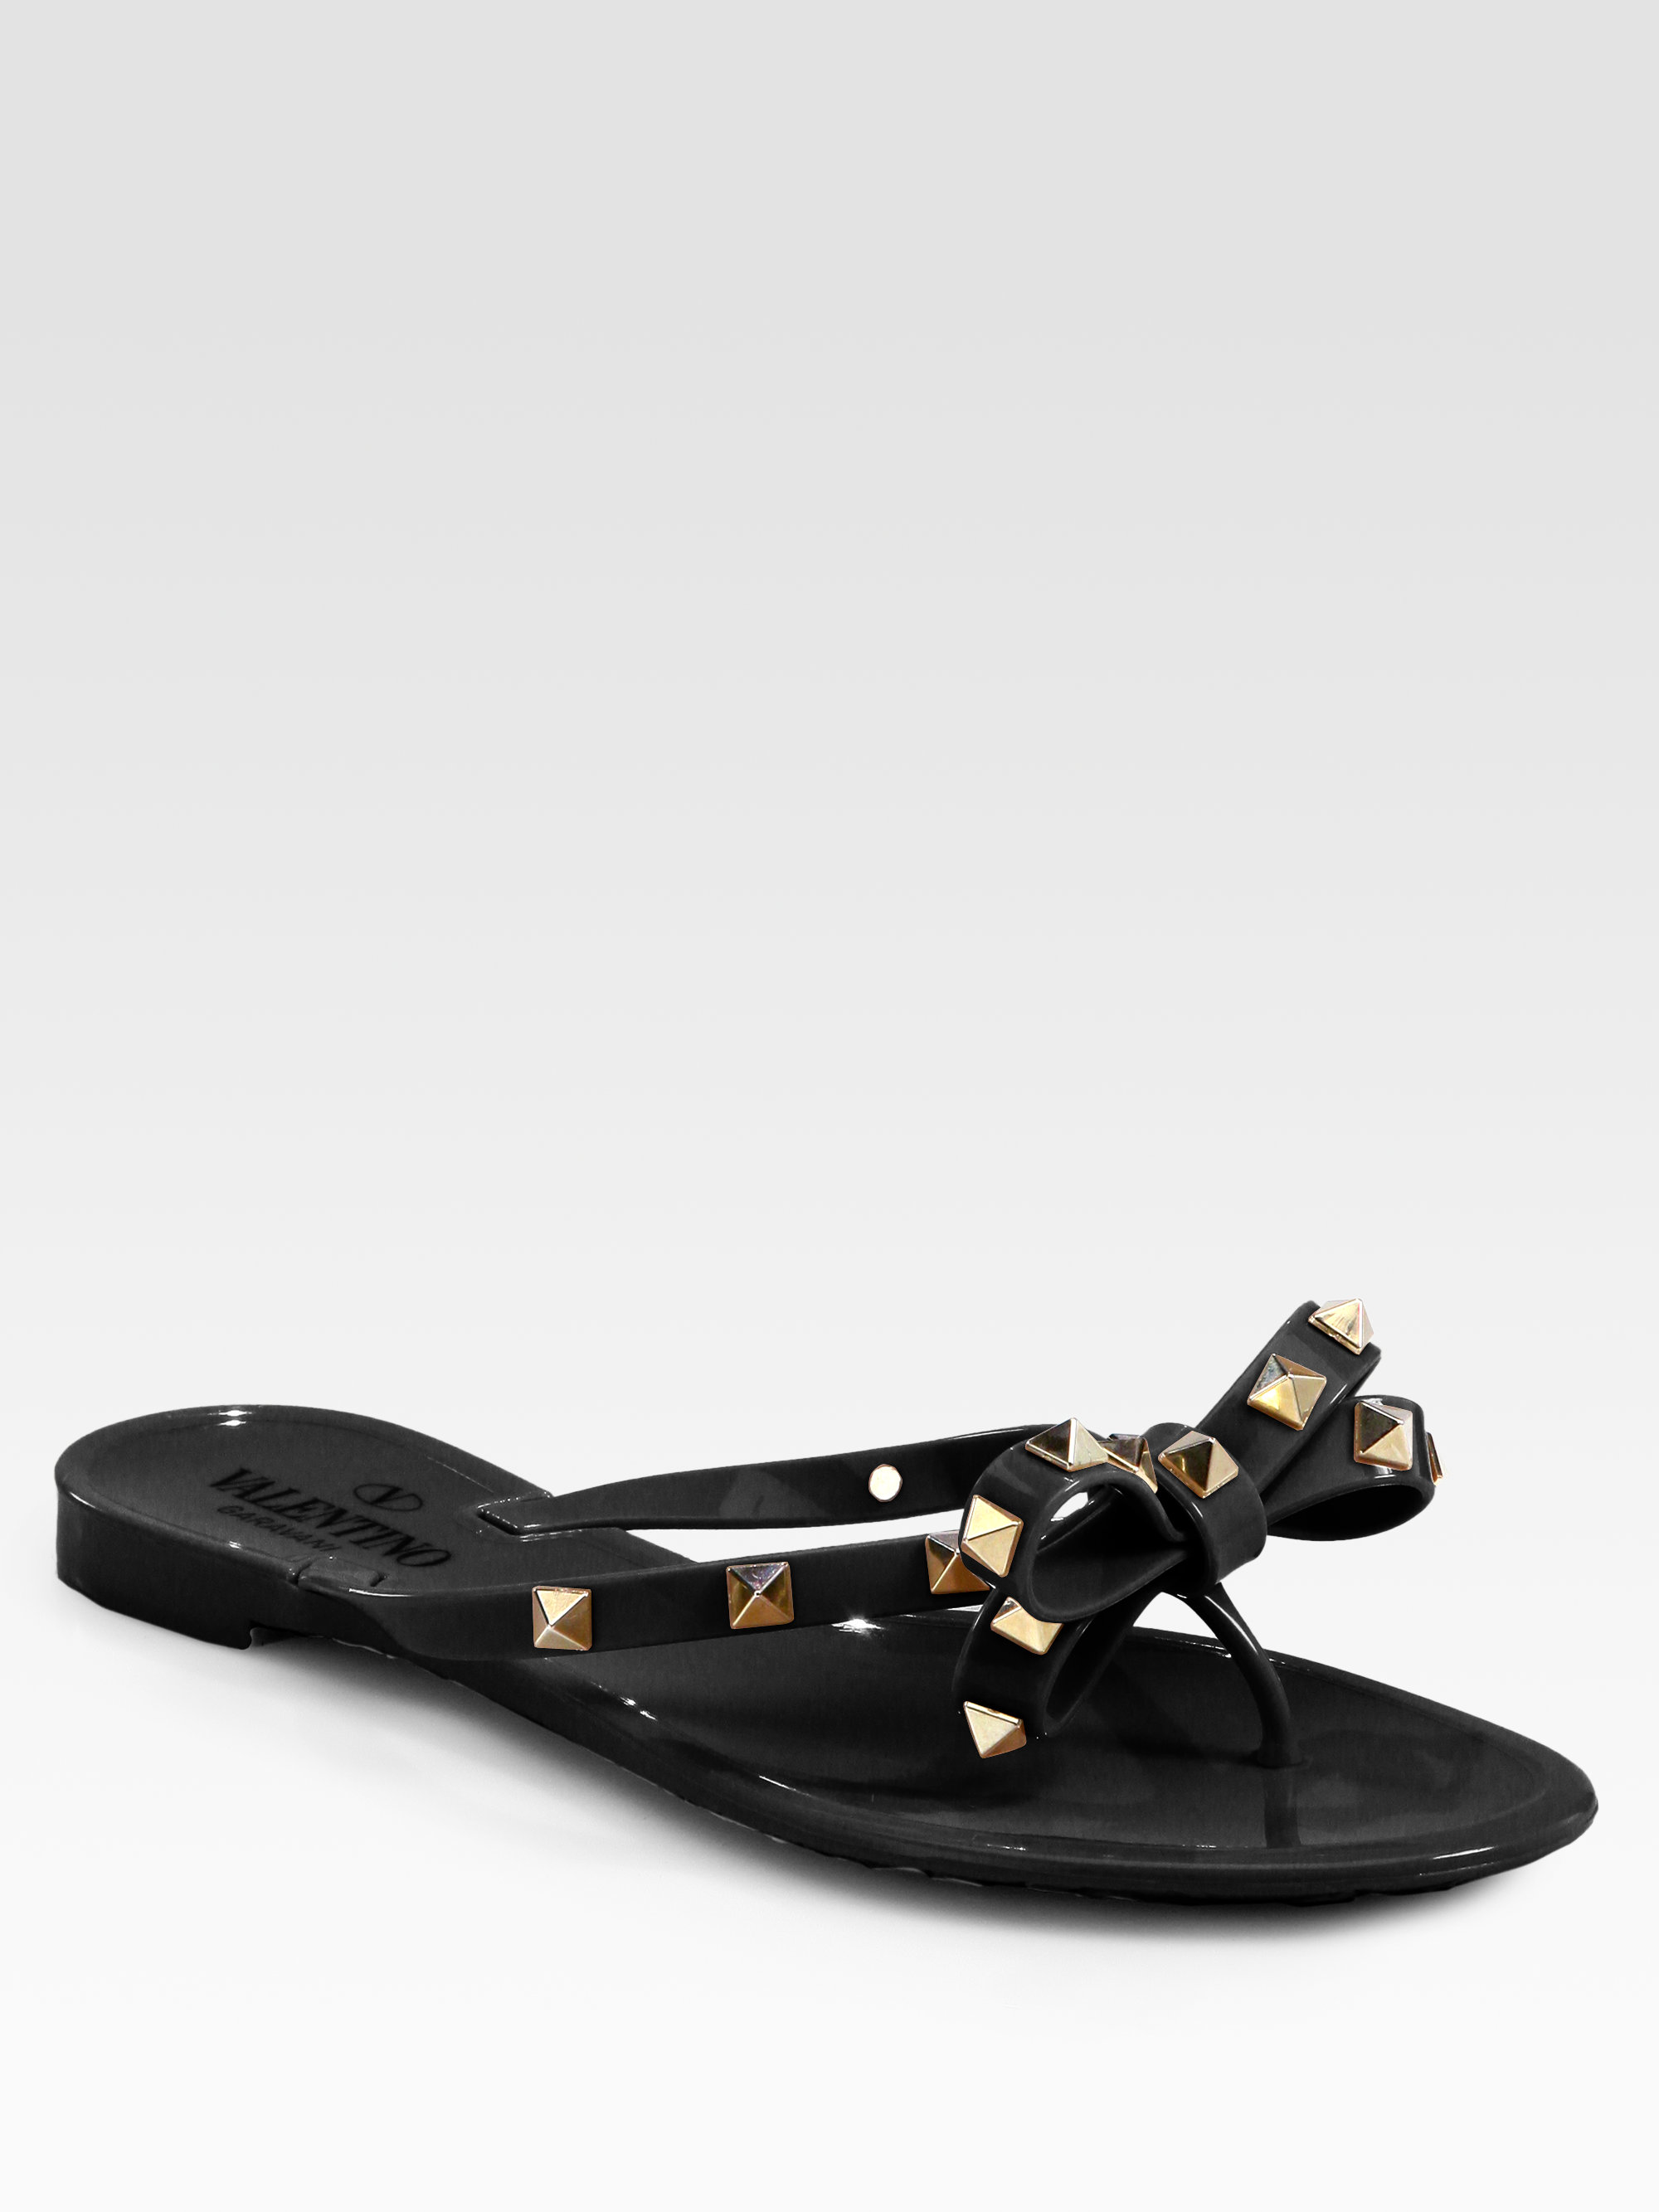 Valentino Rockstud Jelly Sandals in Black - Lyst